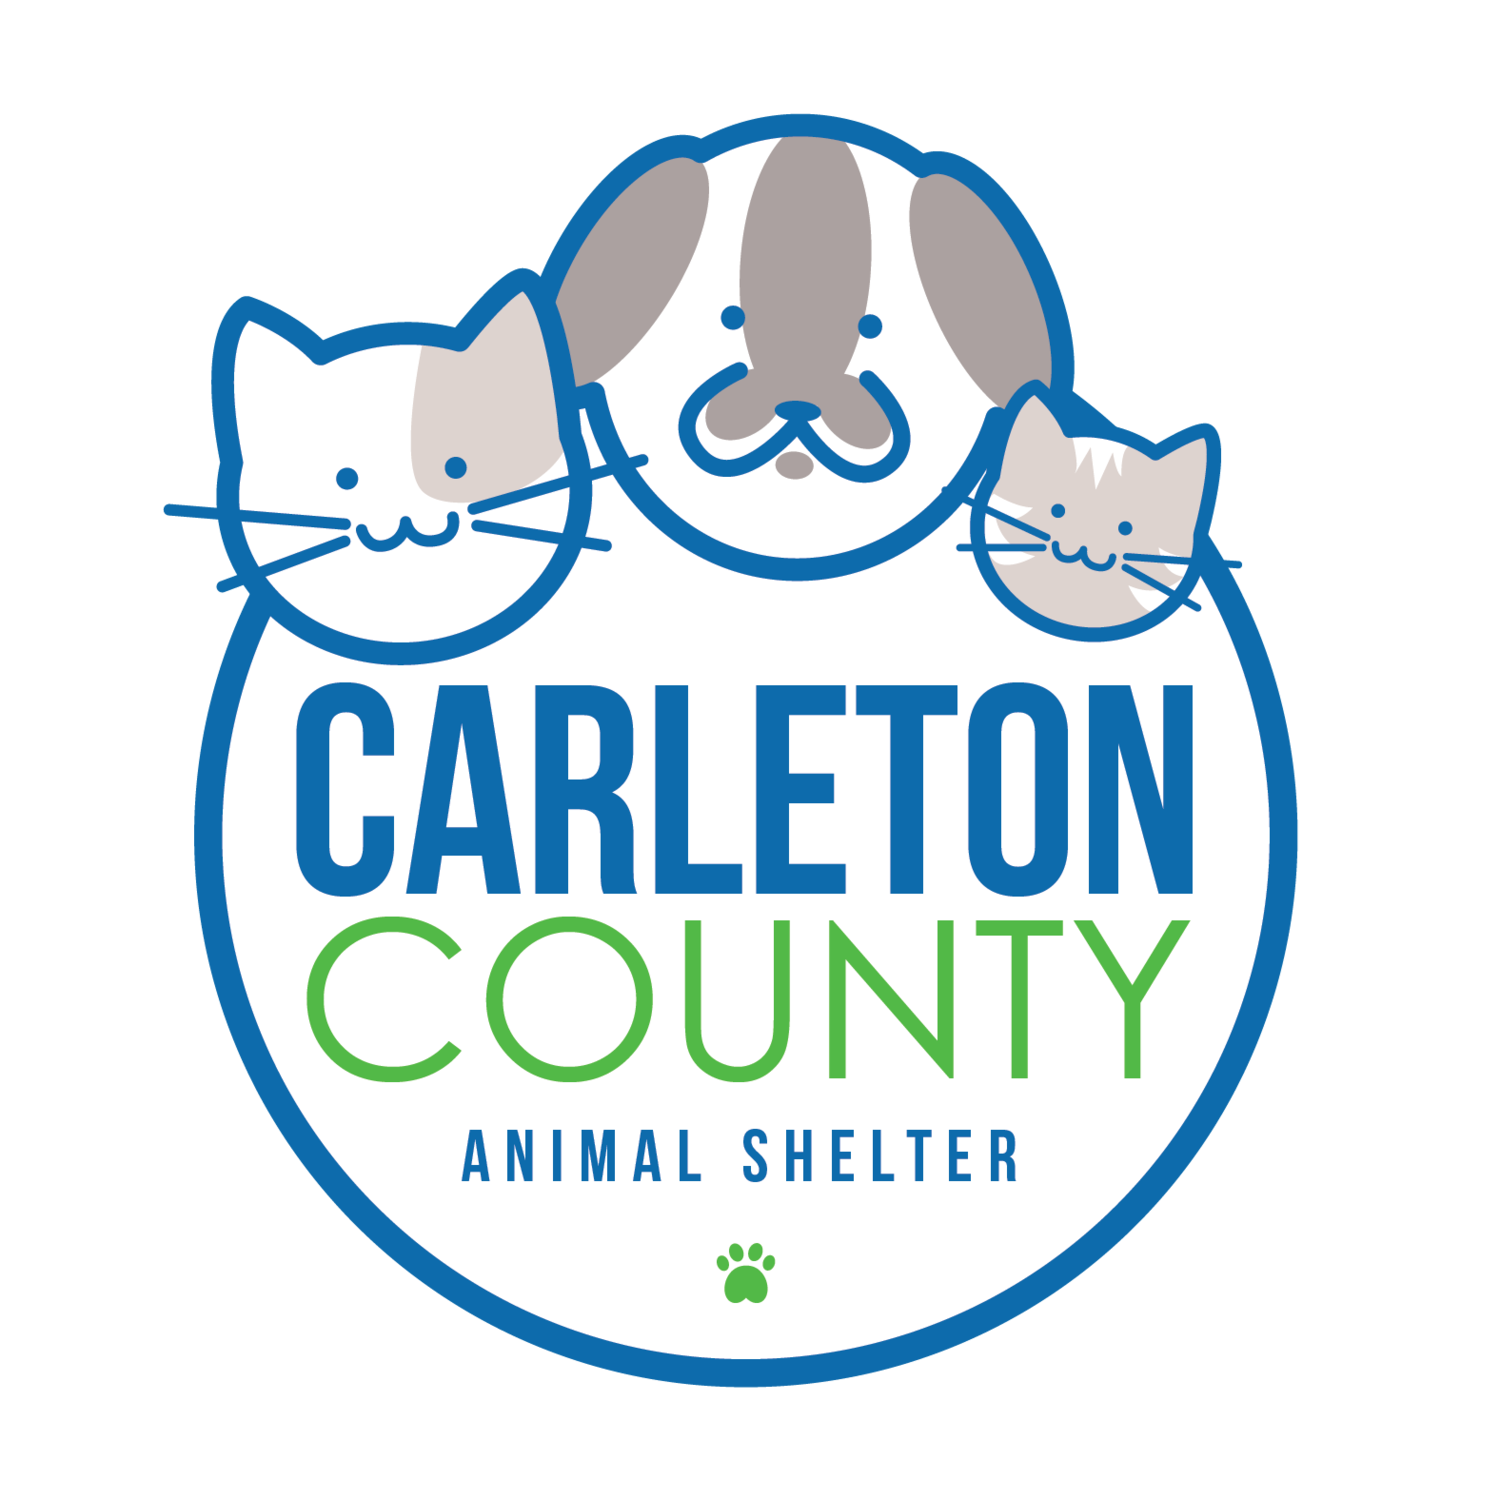 Carleton County Animal Shelter